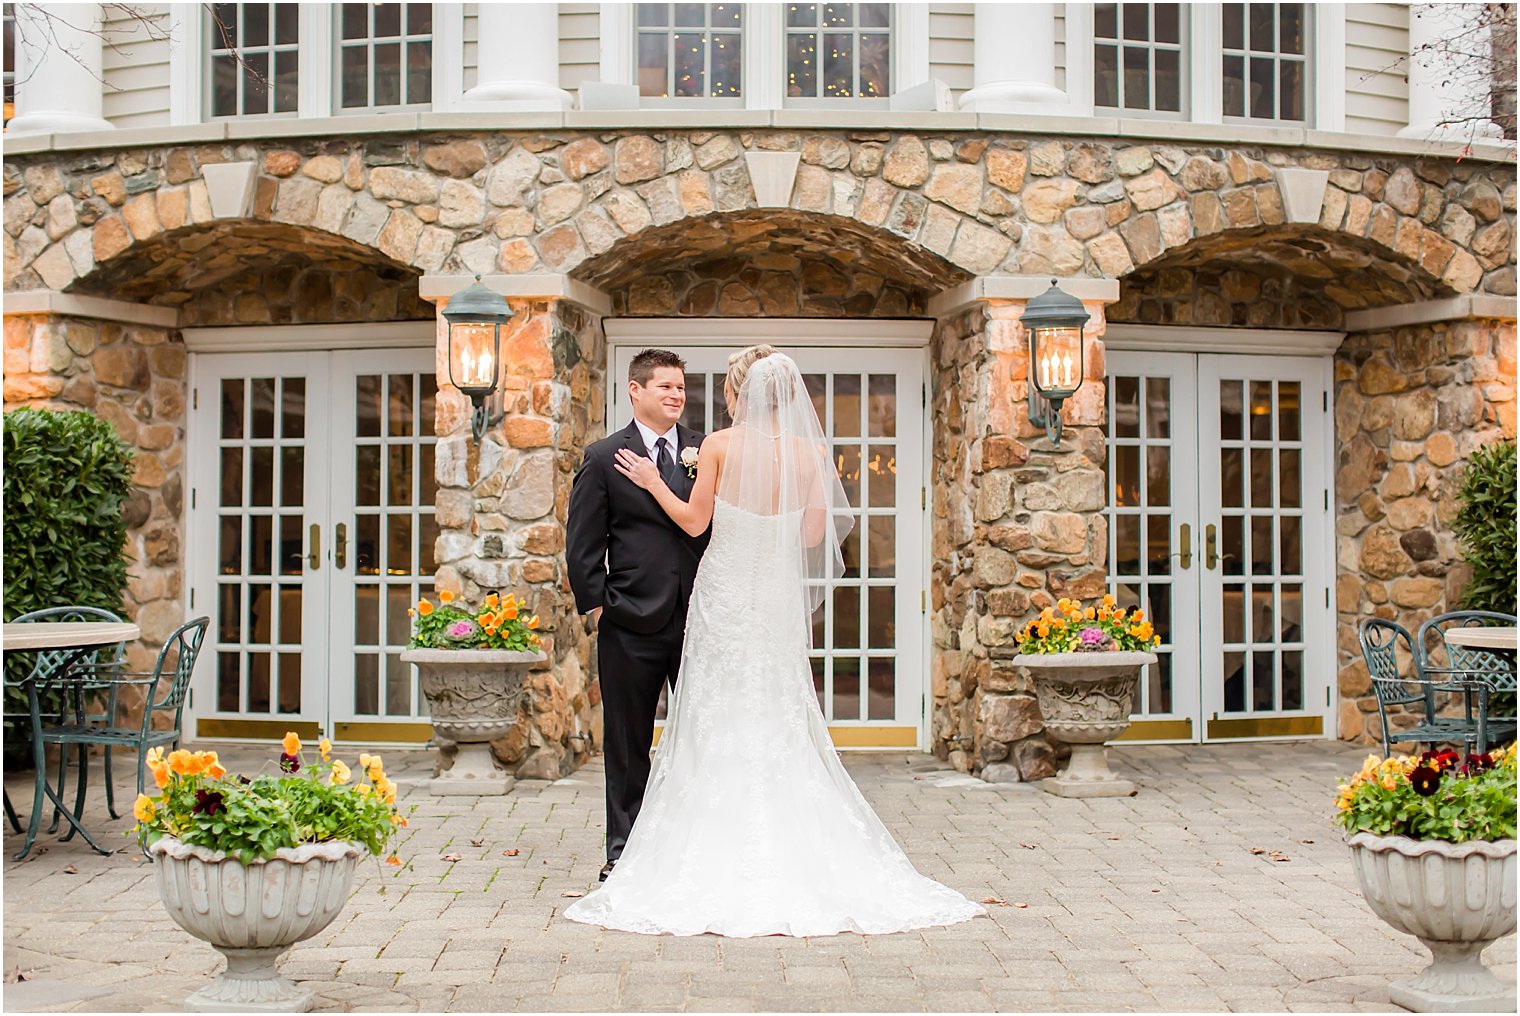 Elegant bride and groom photo at Olde Mill Inn | Photo by Idalia Photography